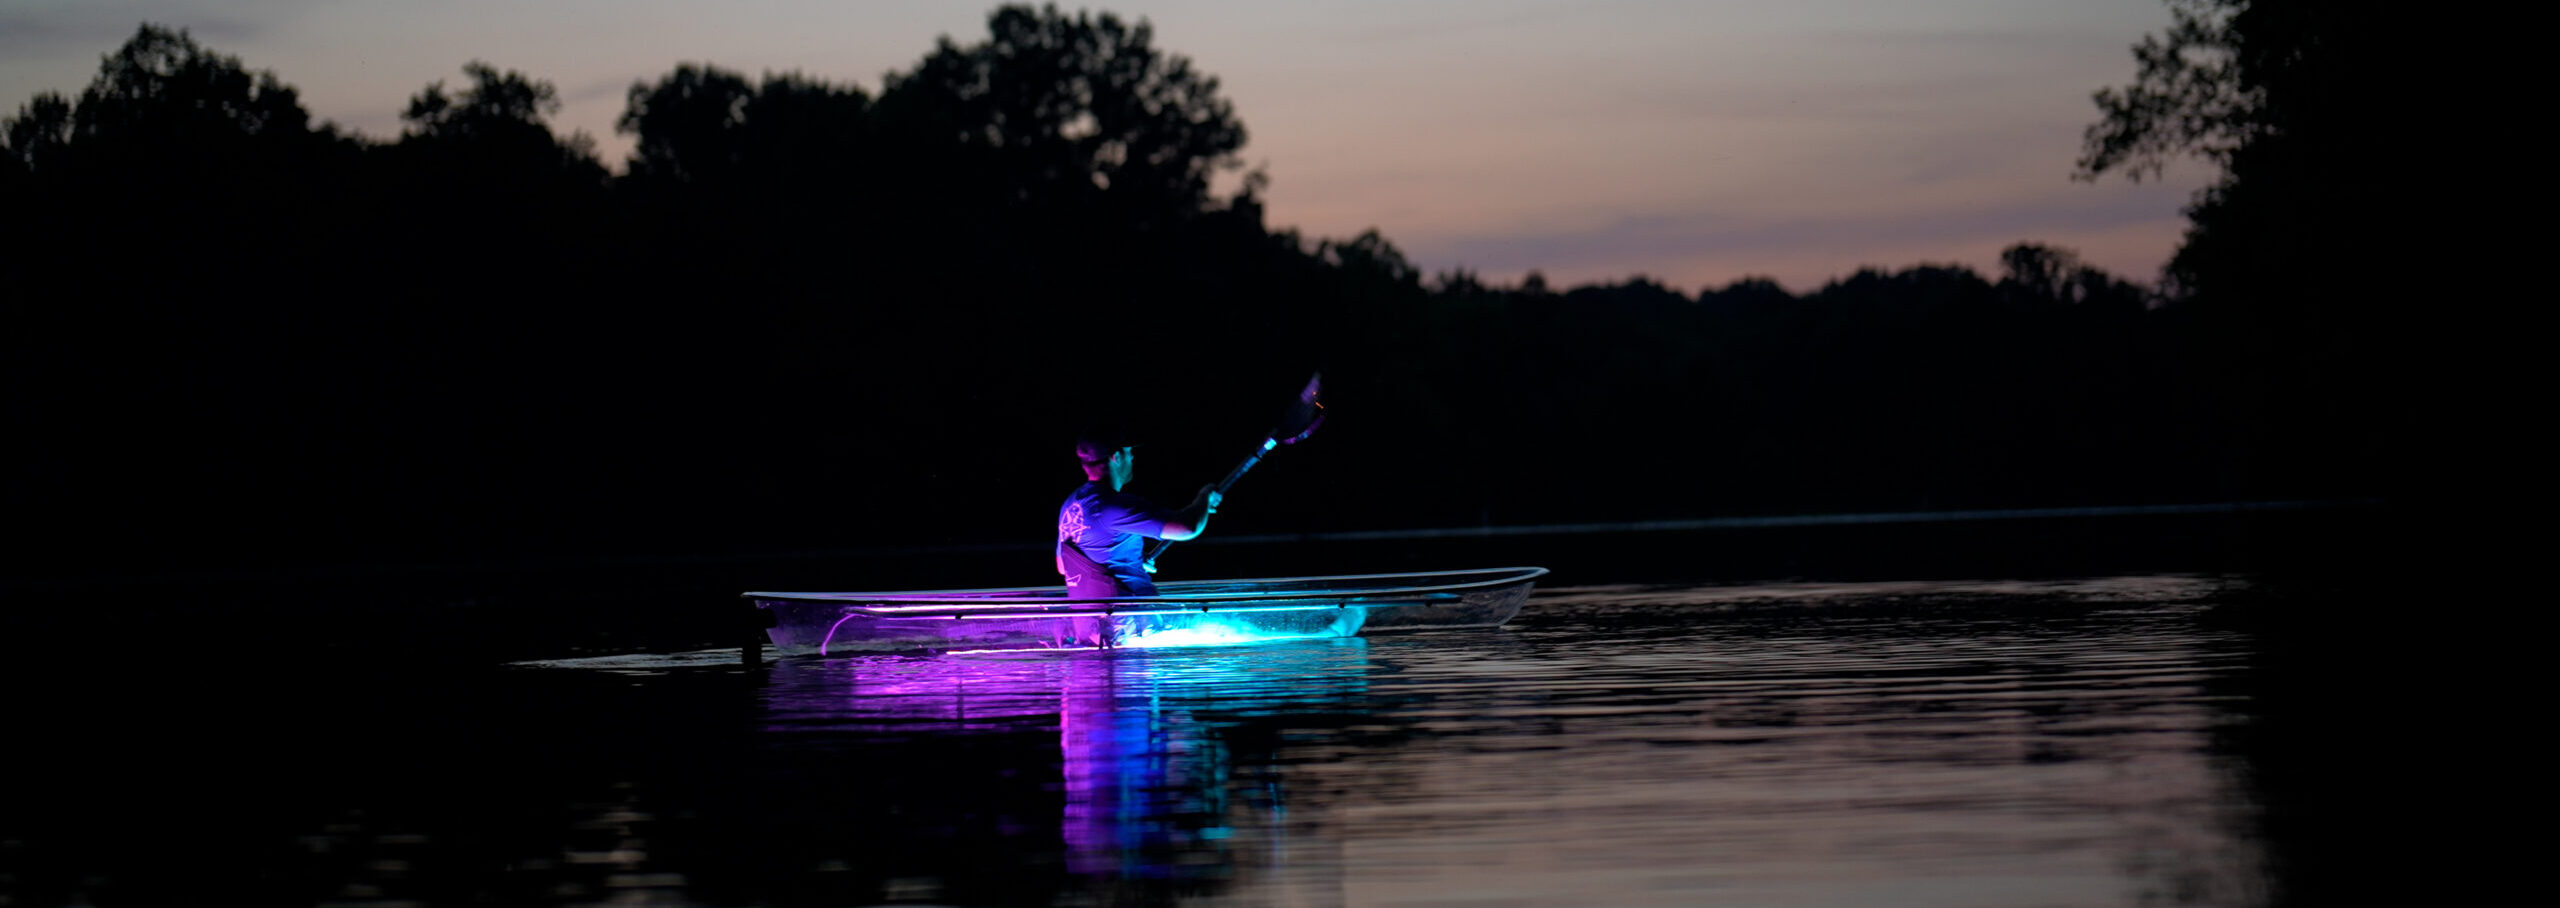 Glow in the dark kayak on Old Hickory Lake